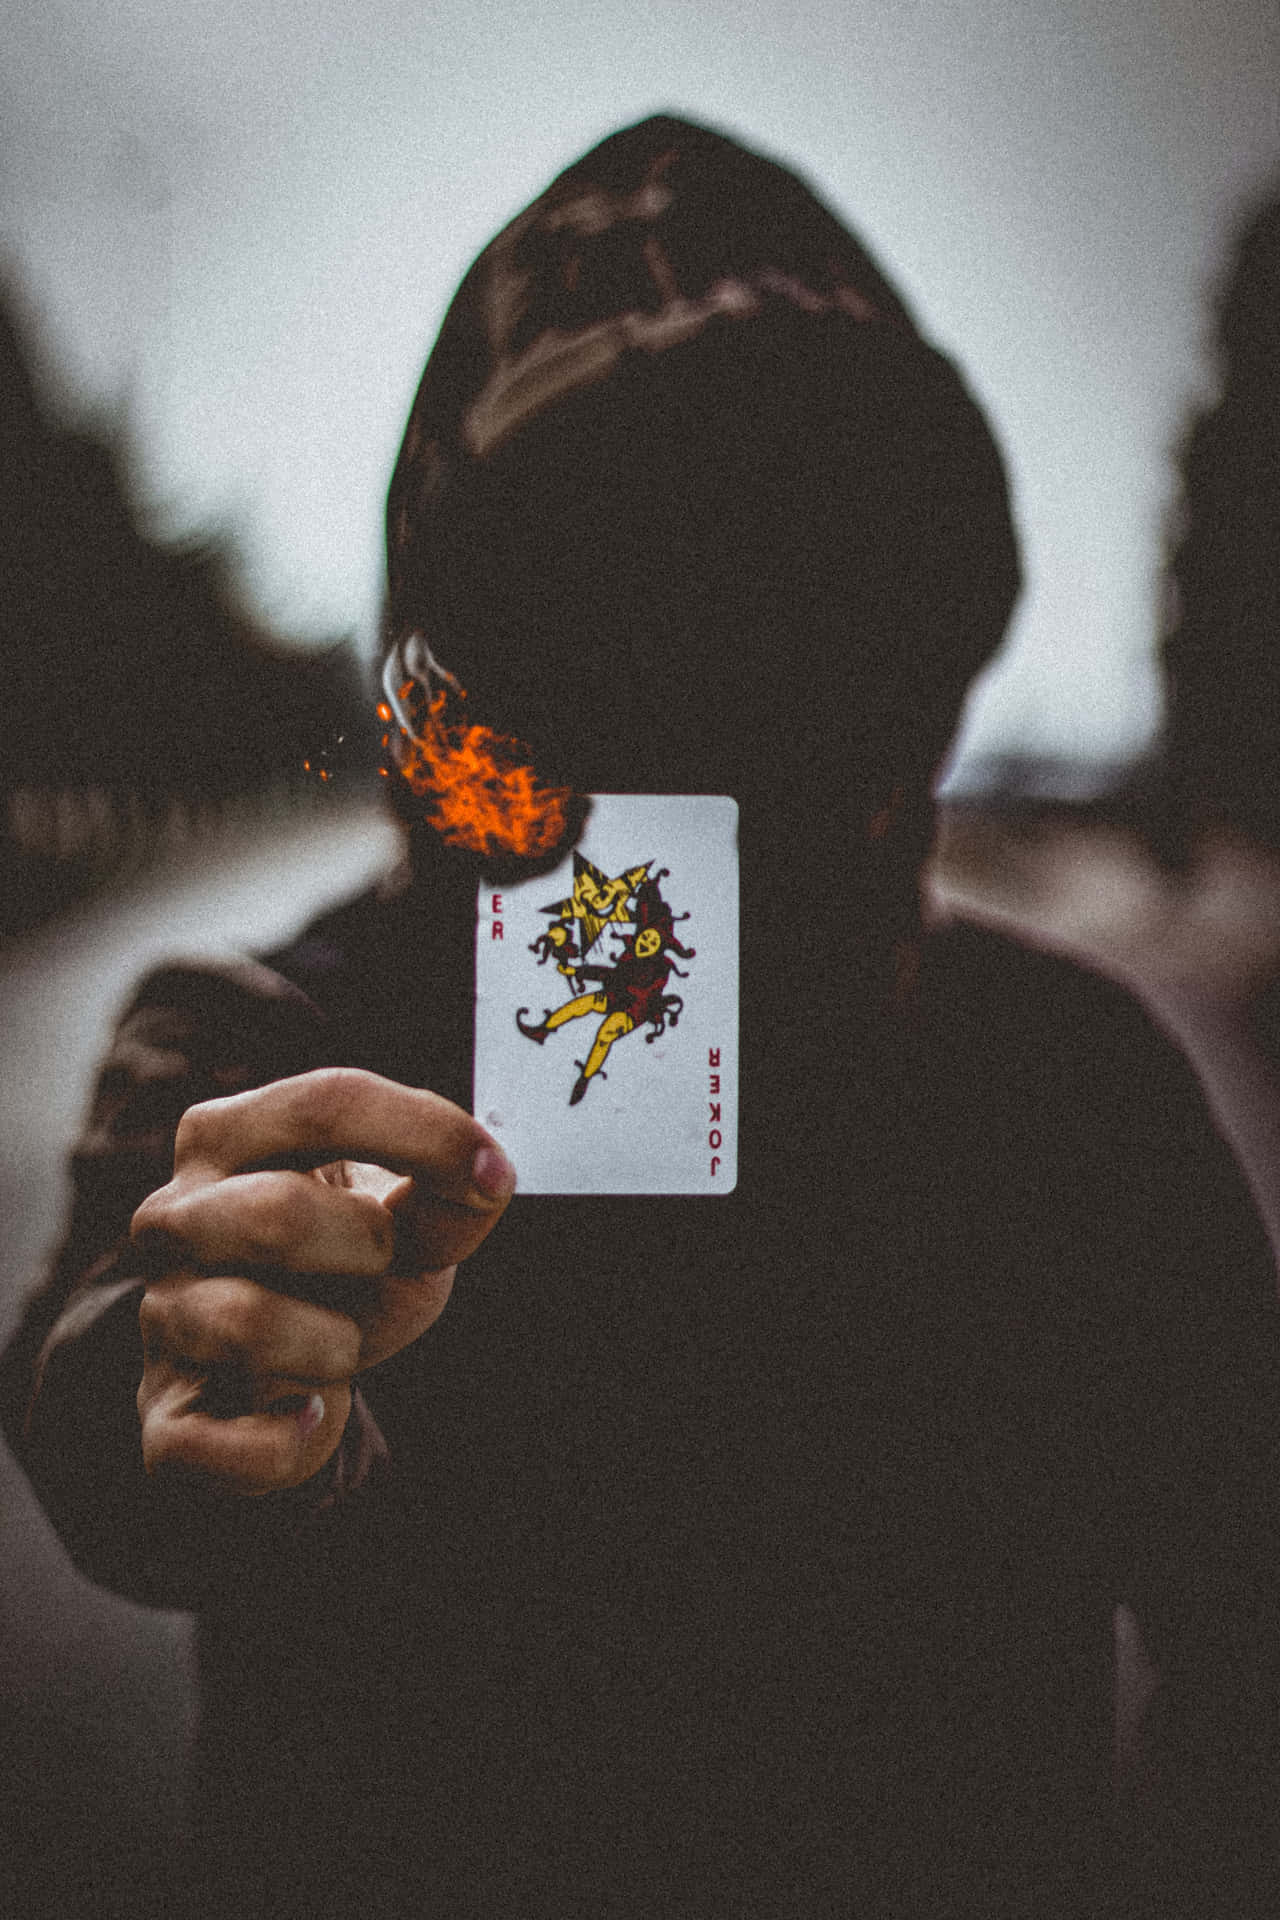 Cool Joker Card On Fire Background